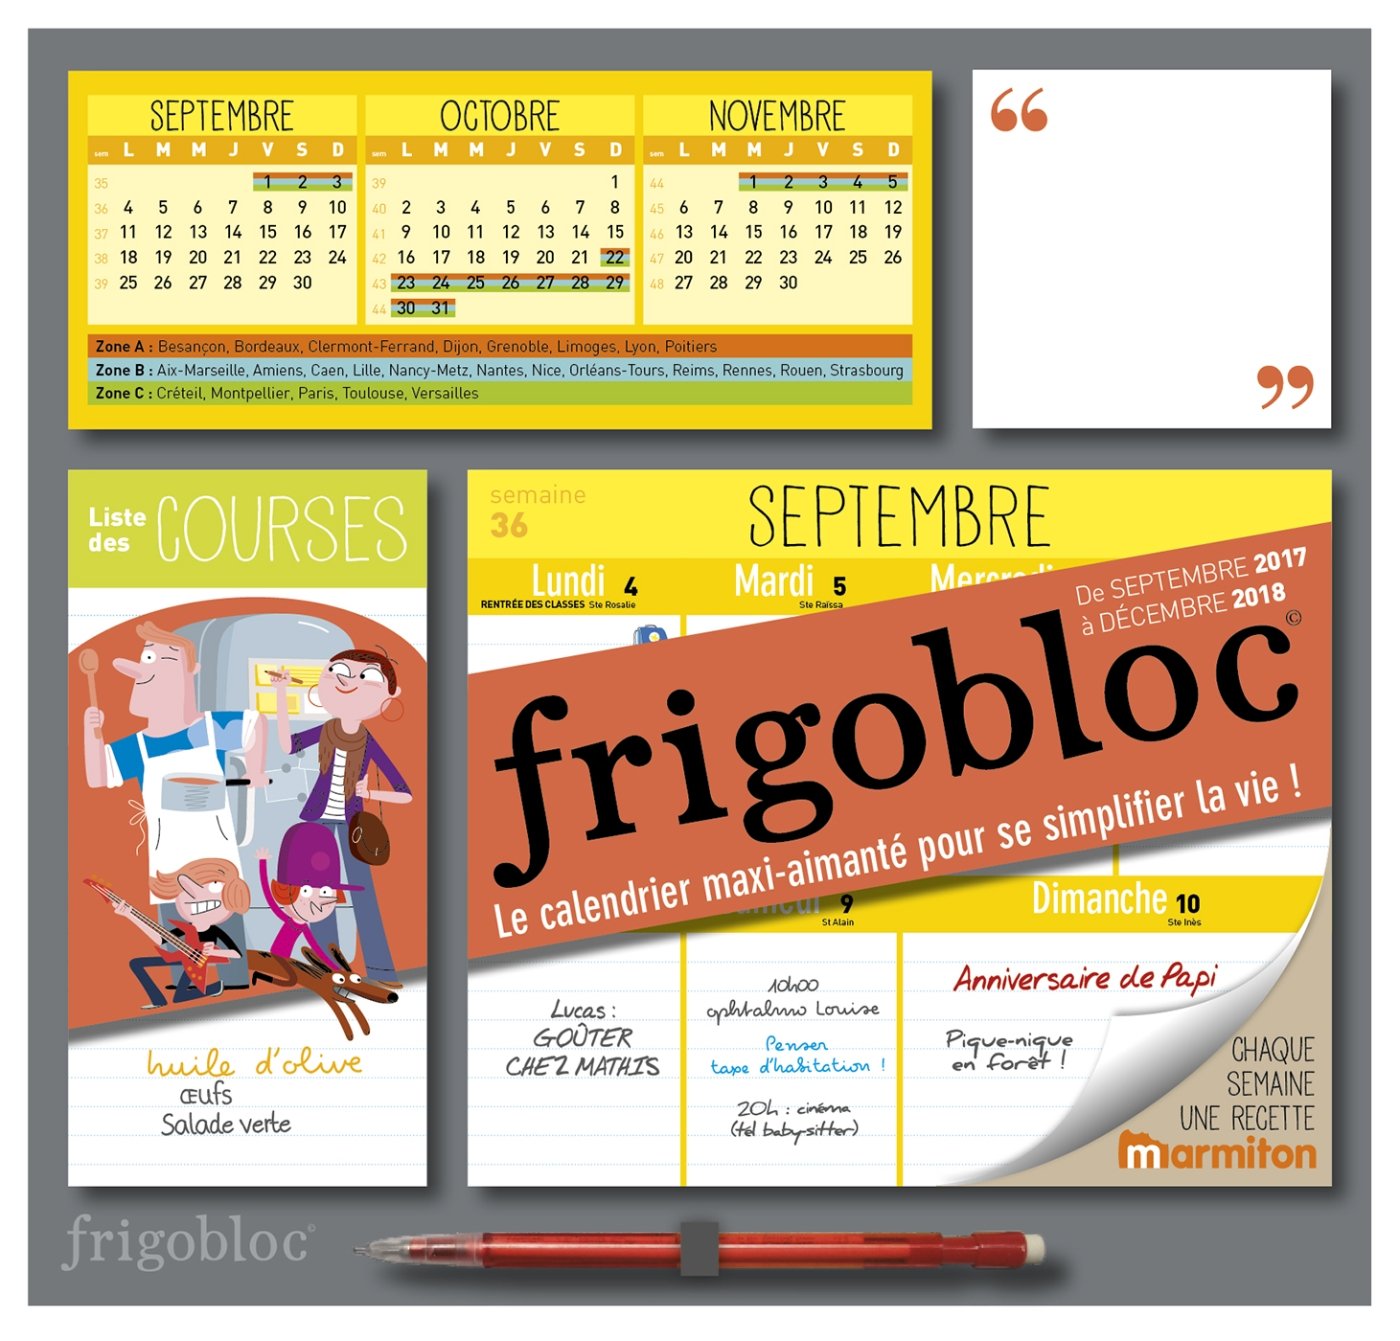 Frigobloc 2018 - Calendrier d'organisation familiale